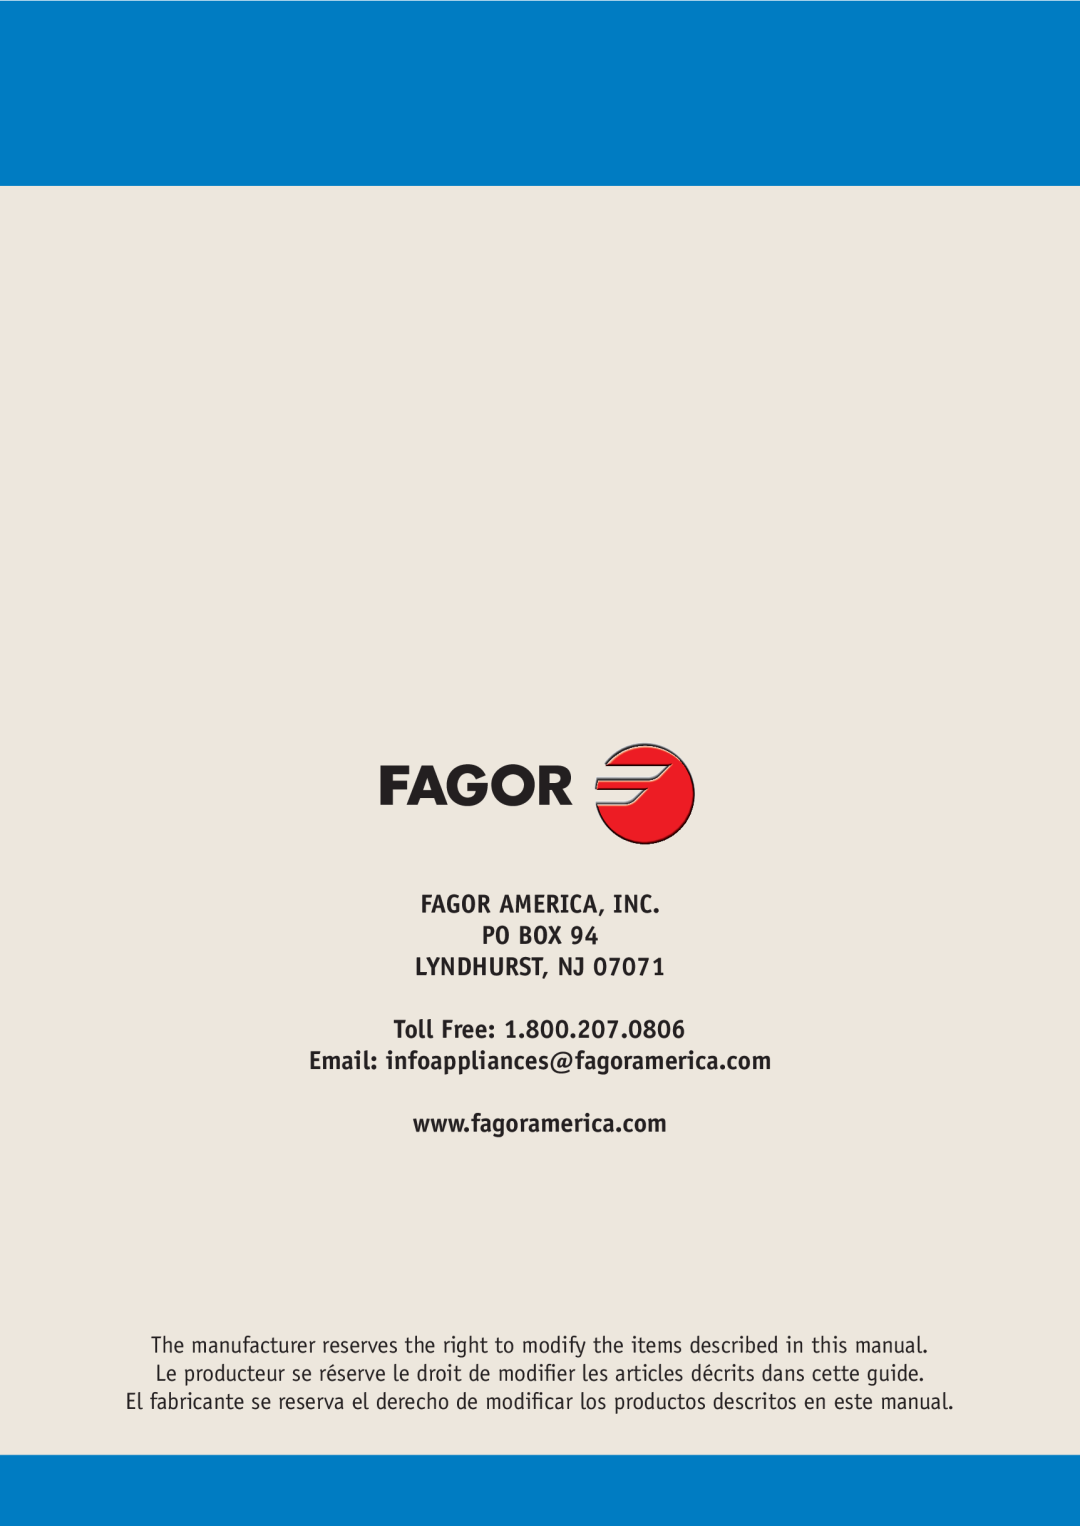 Fagor America LFA-019 SS, LFA-013 FAGOR AMERICA, INC PO BOX LYNDHURST, NJ Toll Free, Email infoappliances@fagoramerica.com 